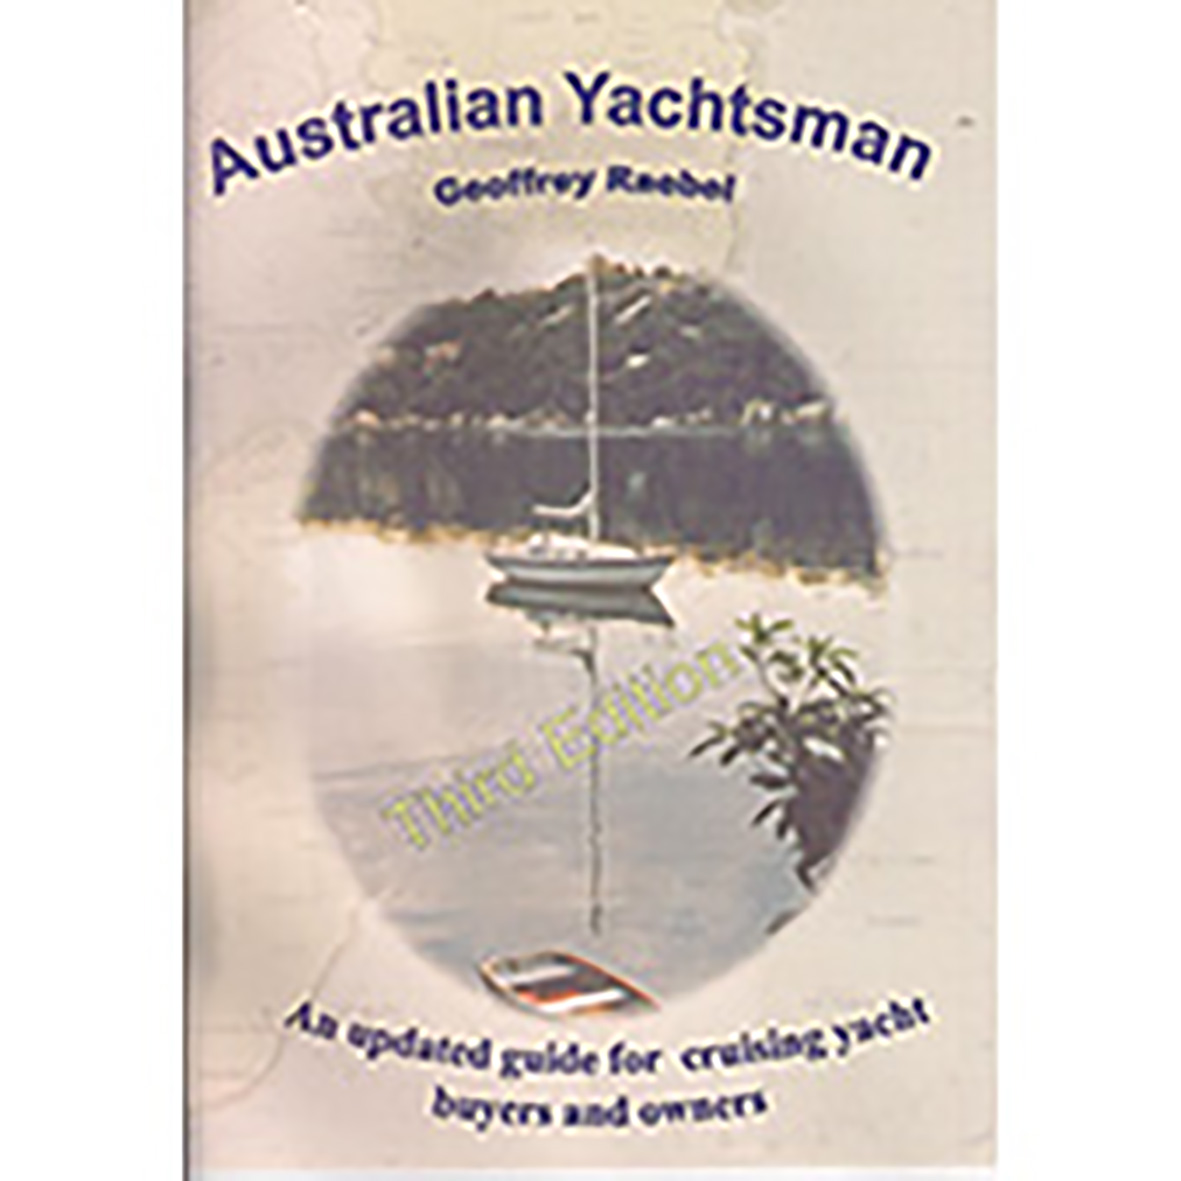 Yachtsman Chart Book